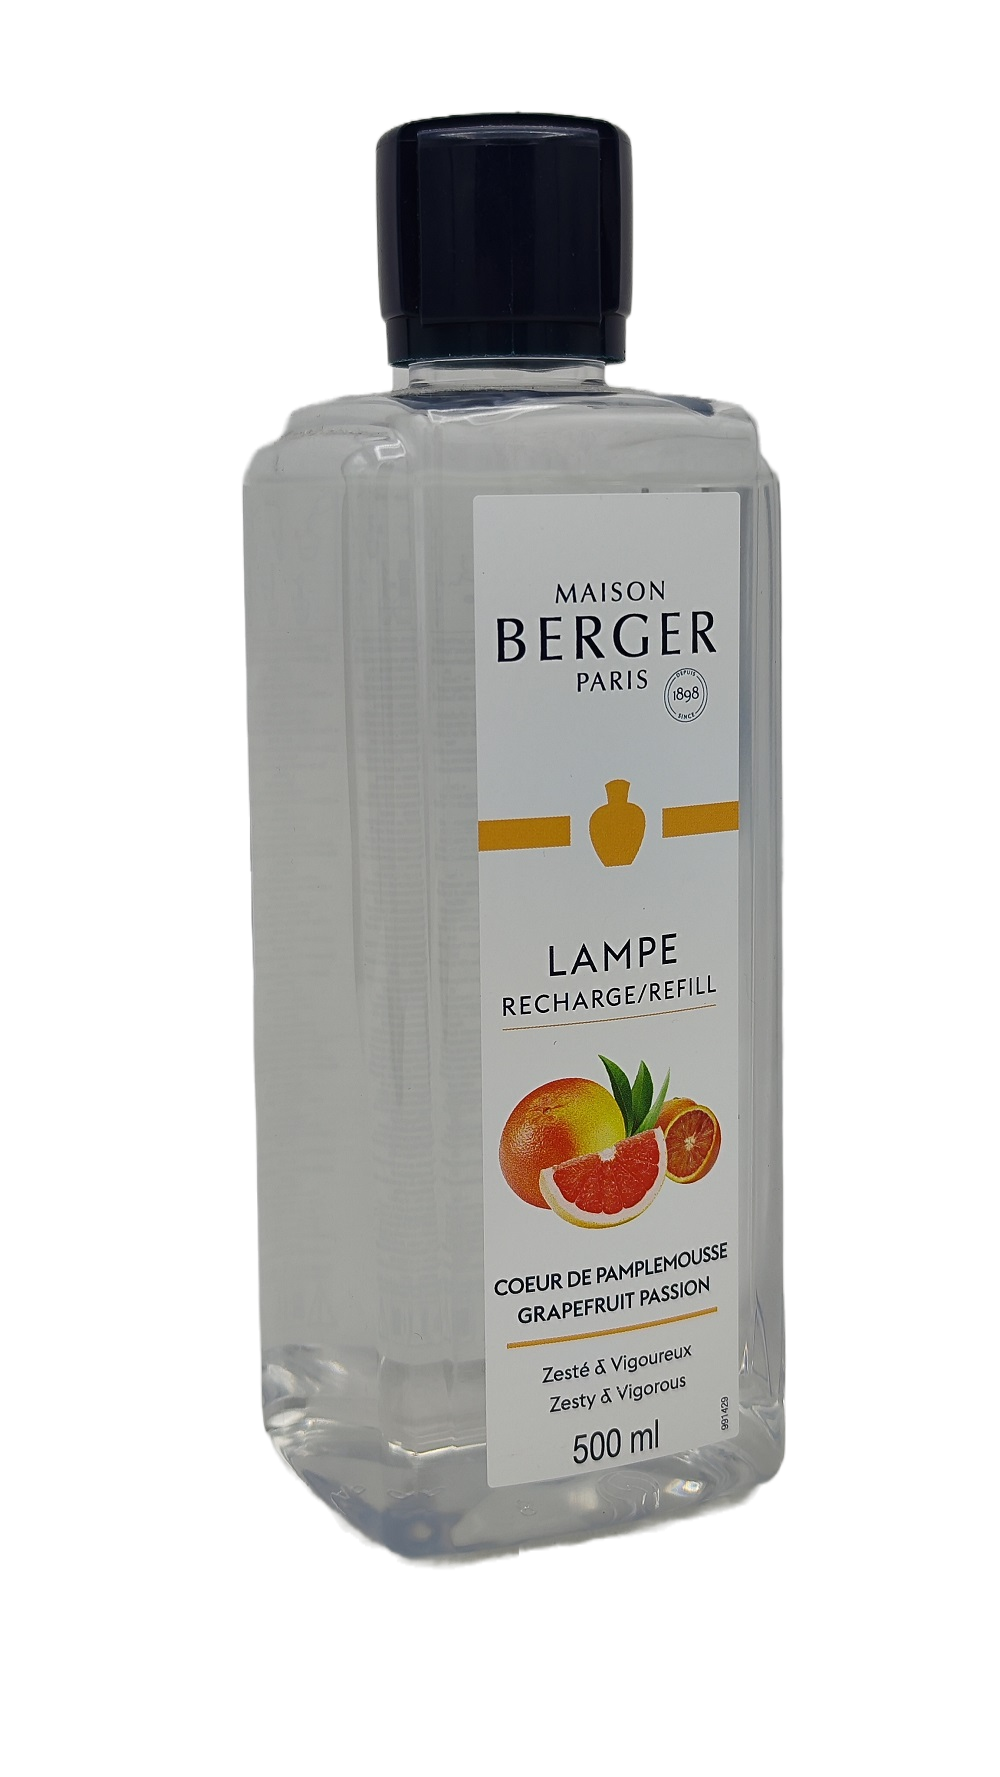 Grapefruit Passion - Lampe Berger Refill 500 ml - Maison Berger